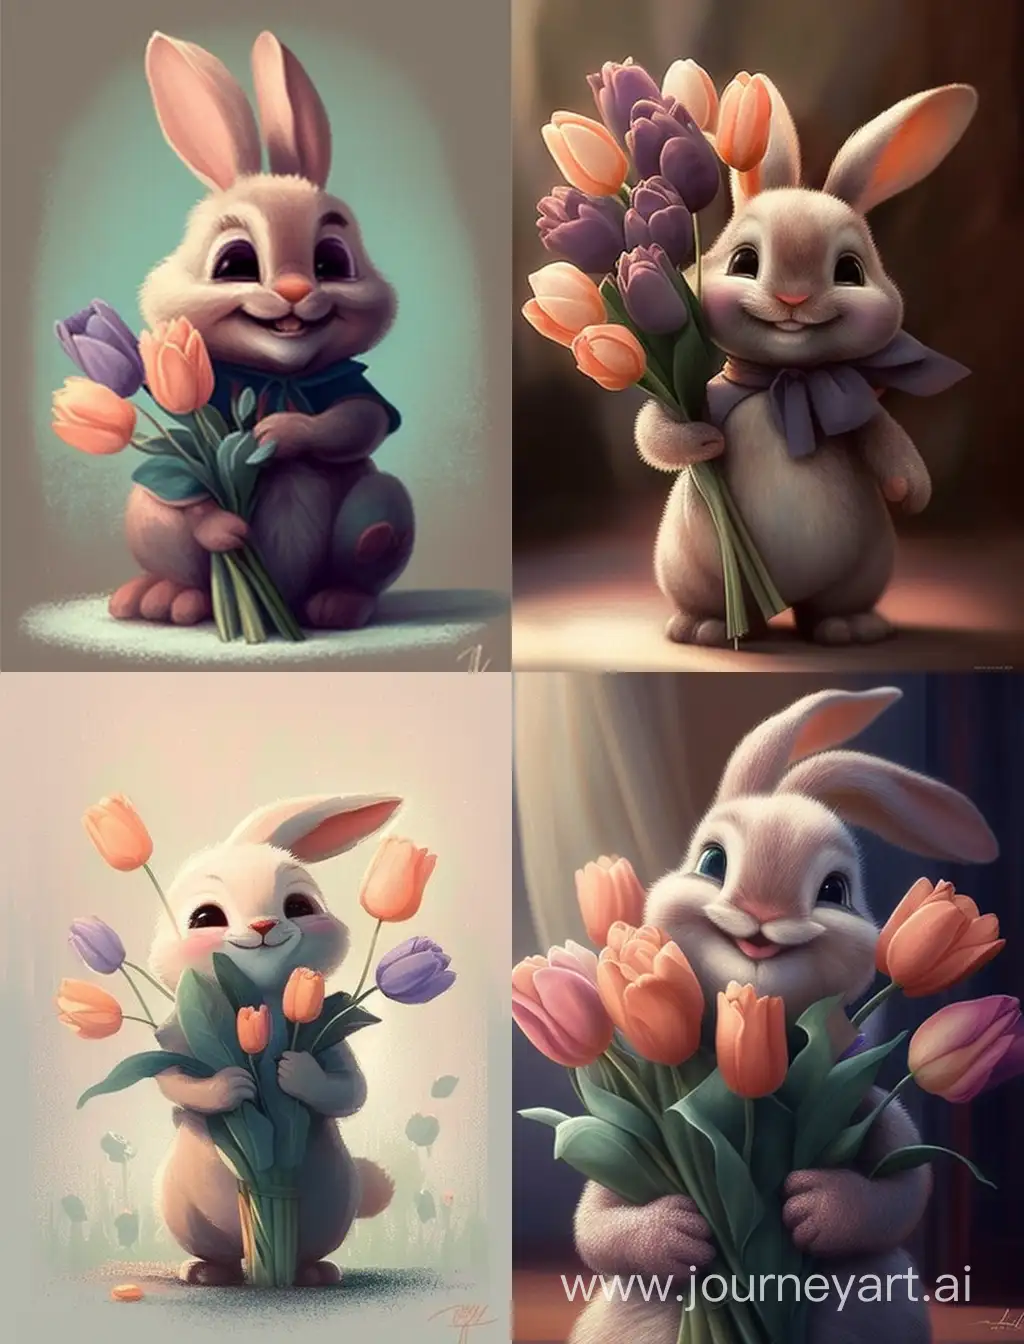 Joyful-Bunny-with-Pastel-Tulip-Bouquet-Disney-Pixar-Style